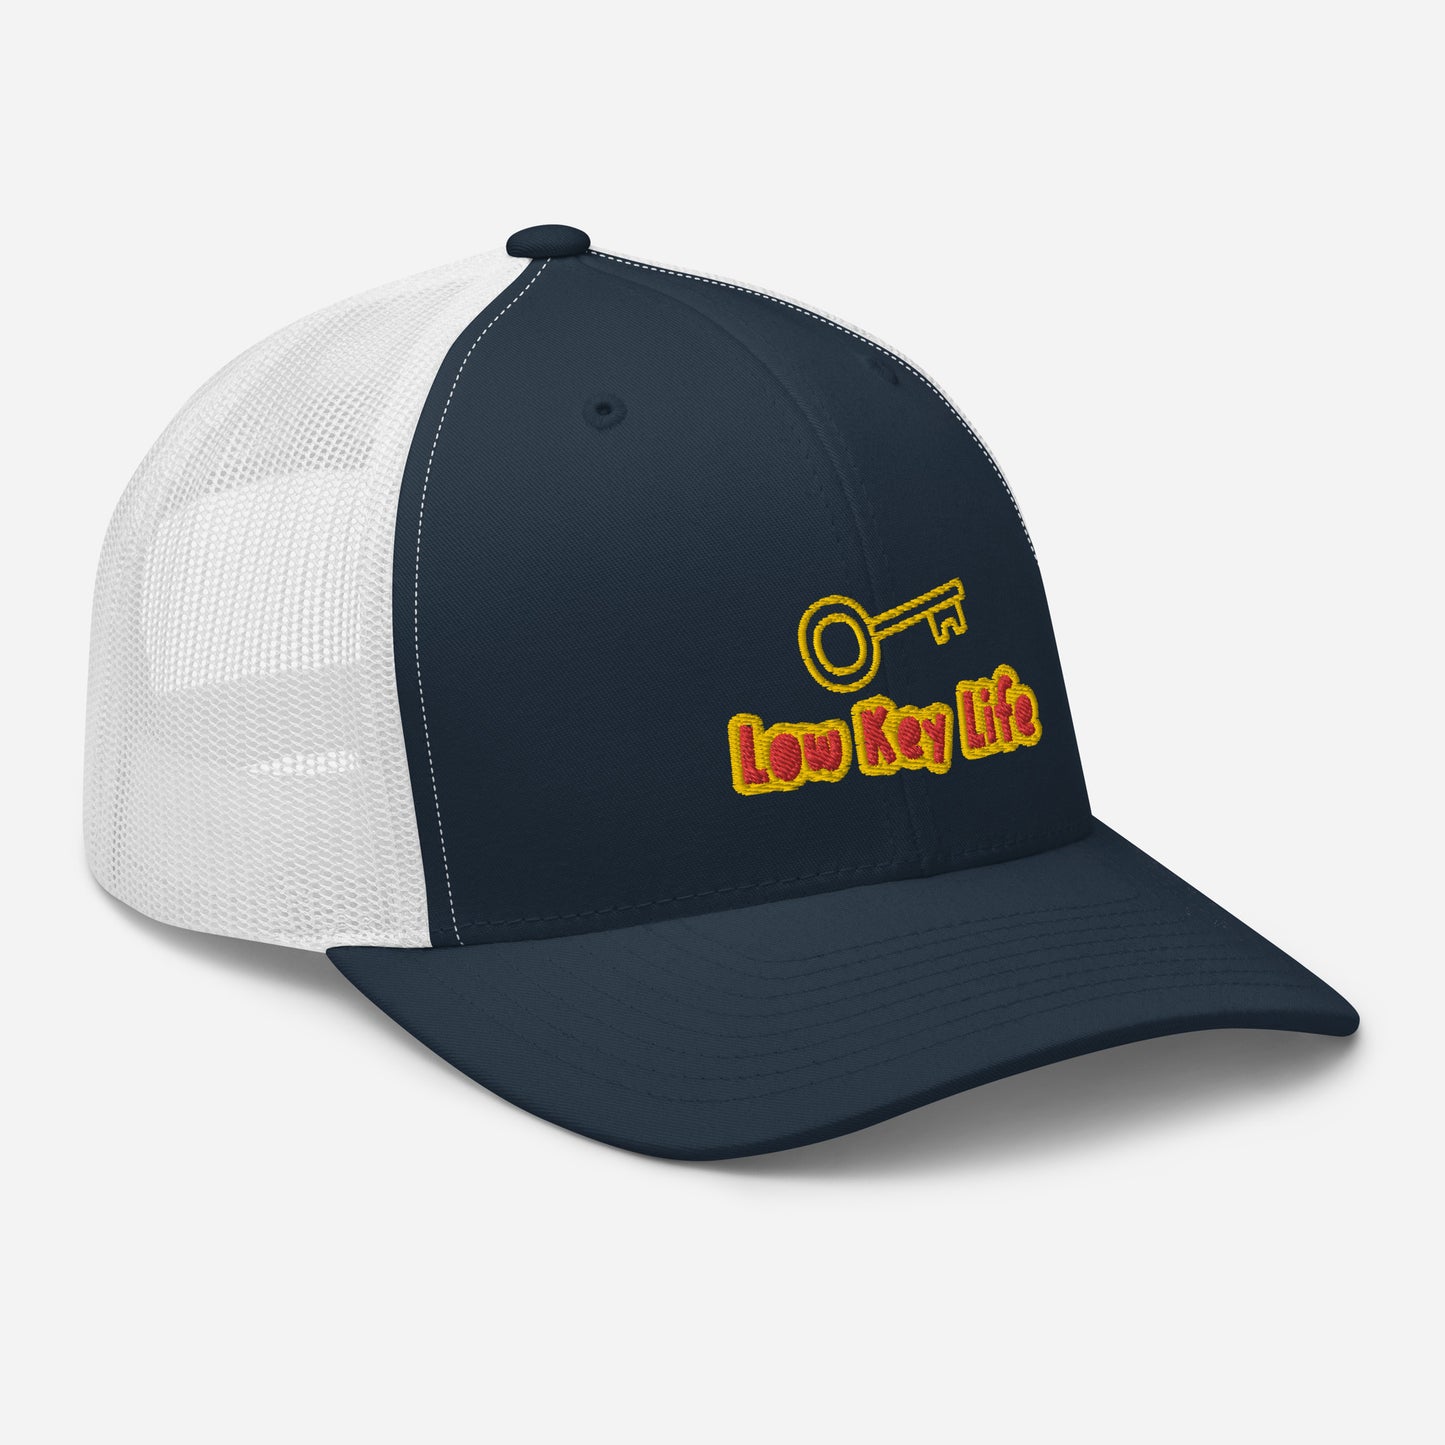 "Low key life" trucker cap